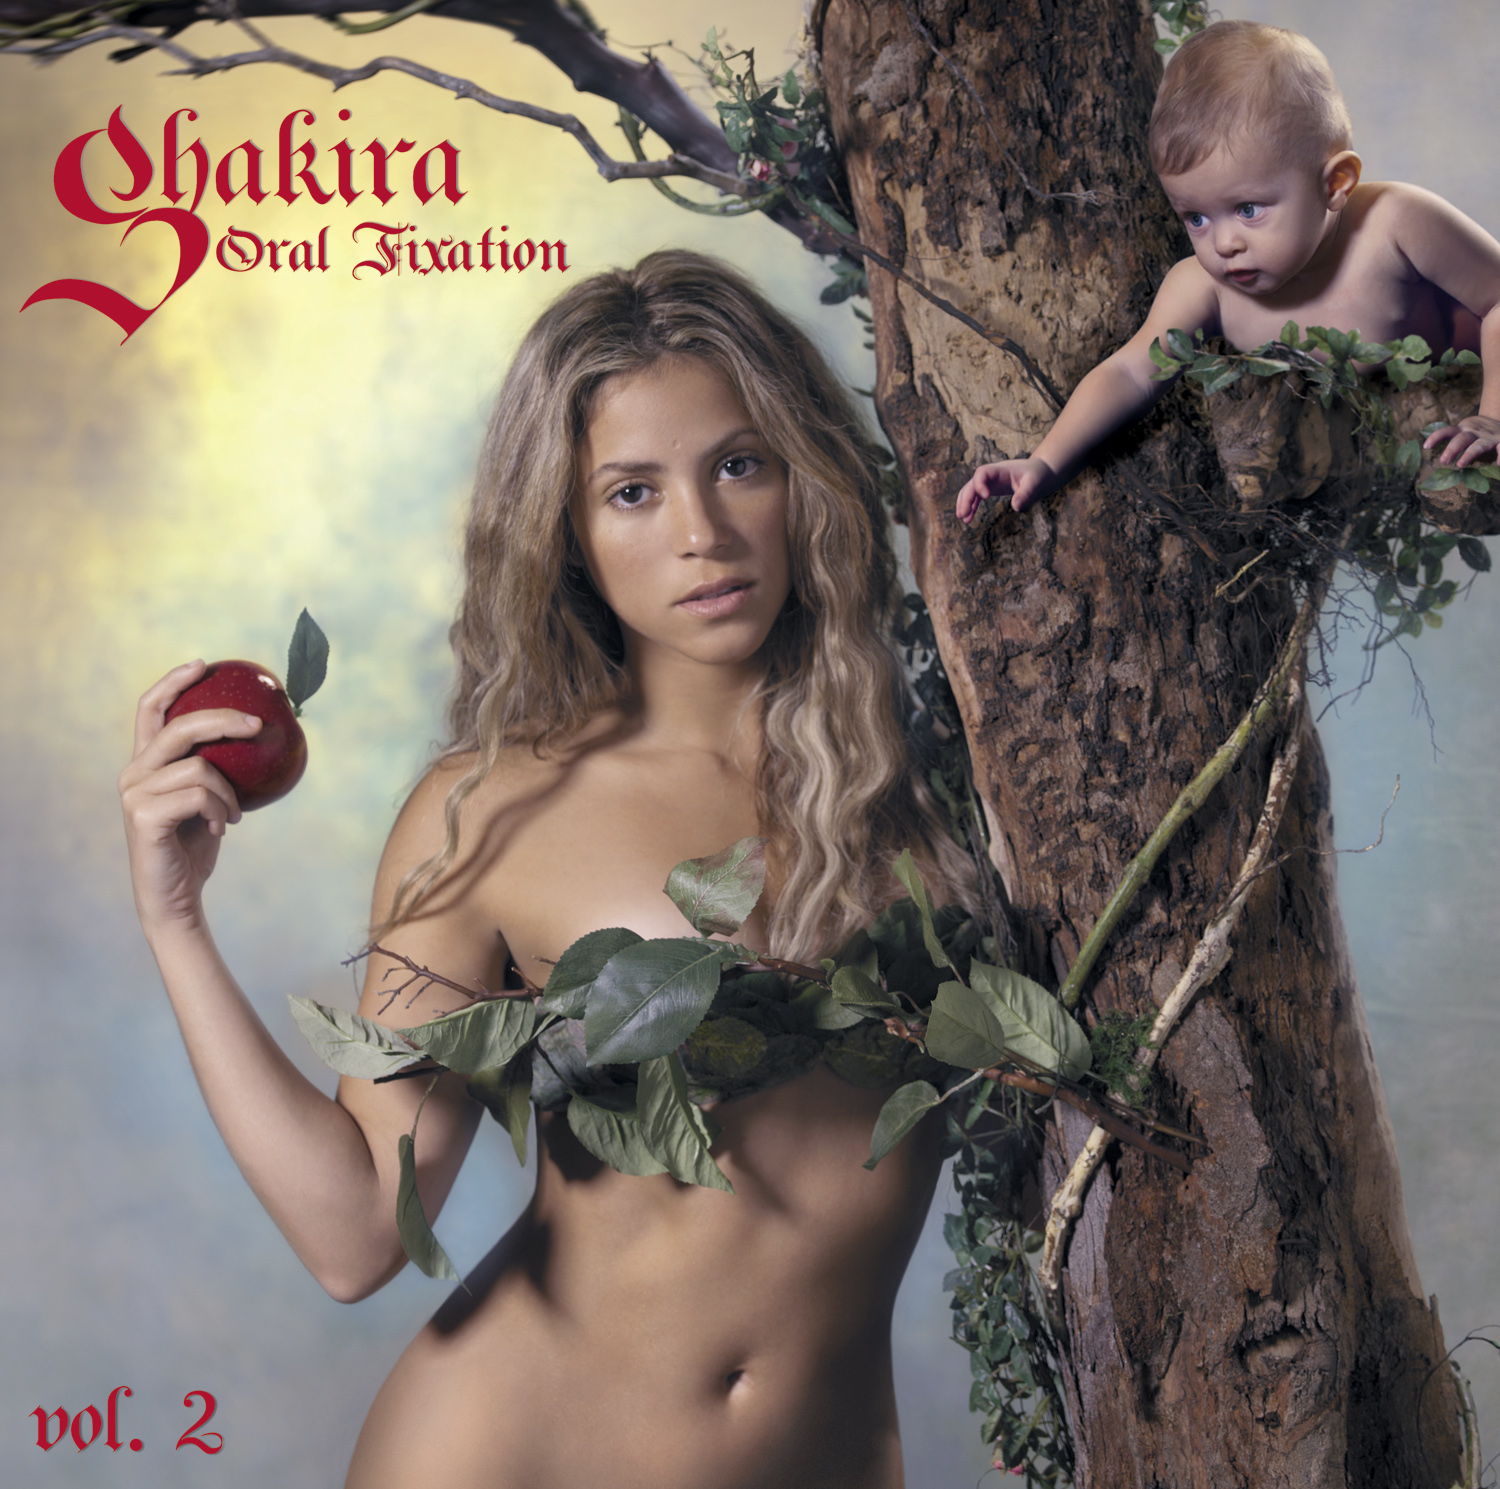 Shakira - Oral Fixation vol. 2